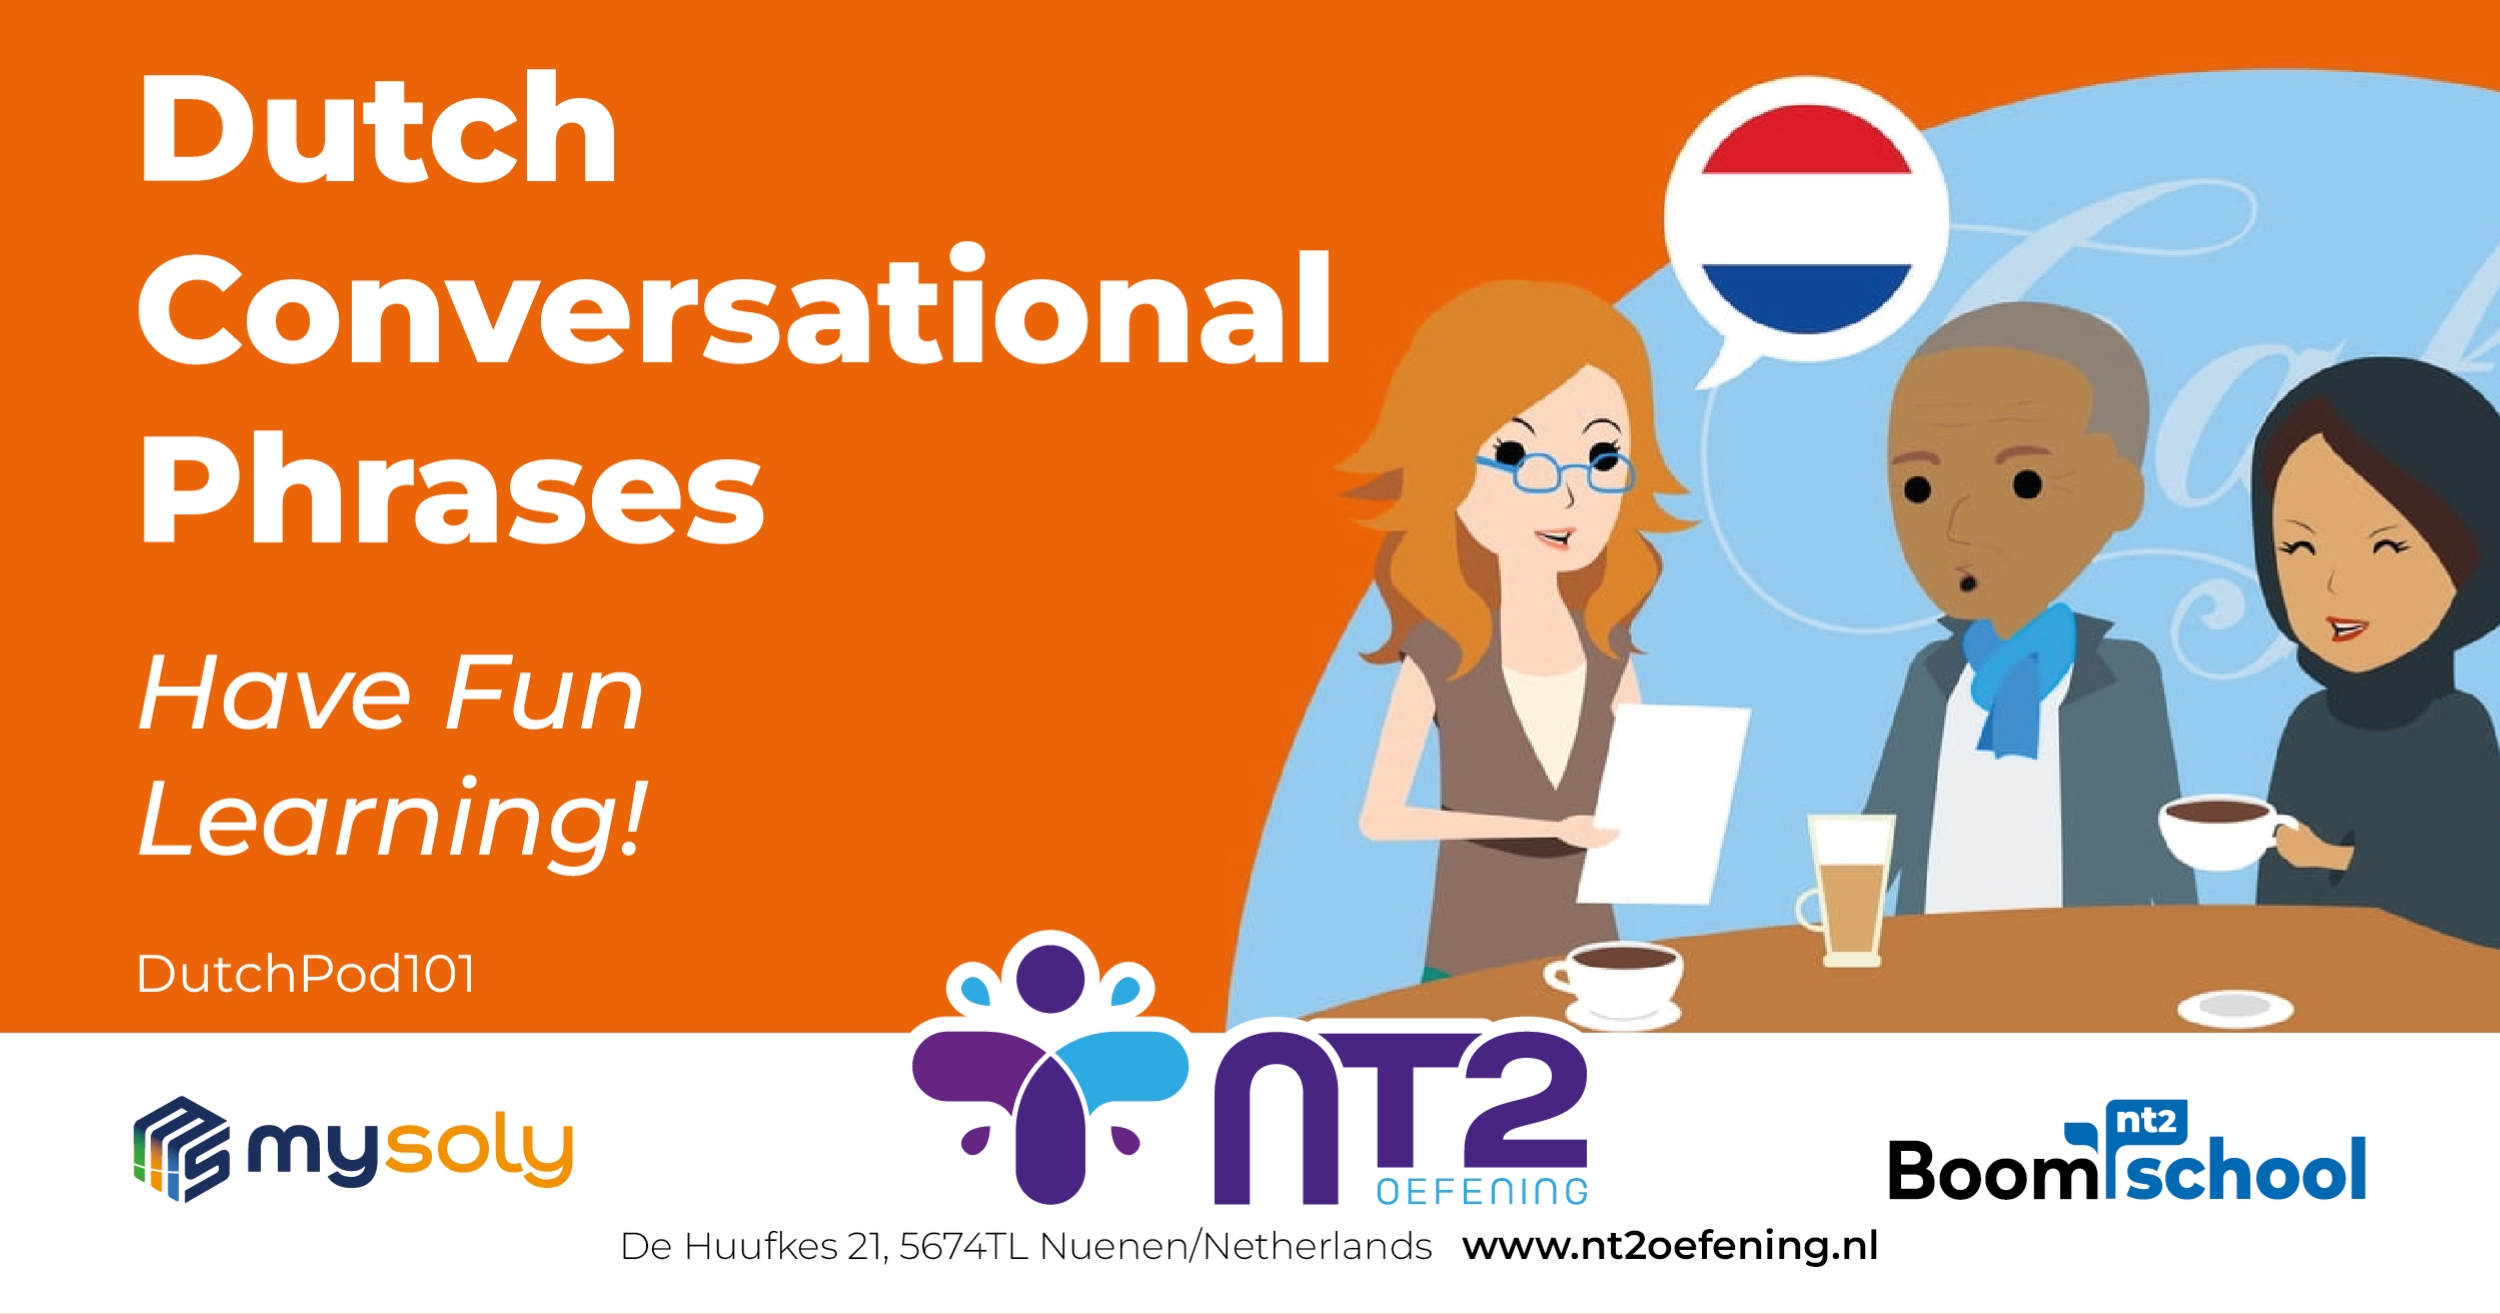 Dutch Conversational Phrases! Dutch Podcasts